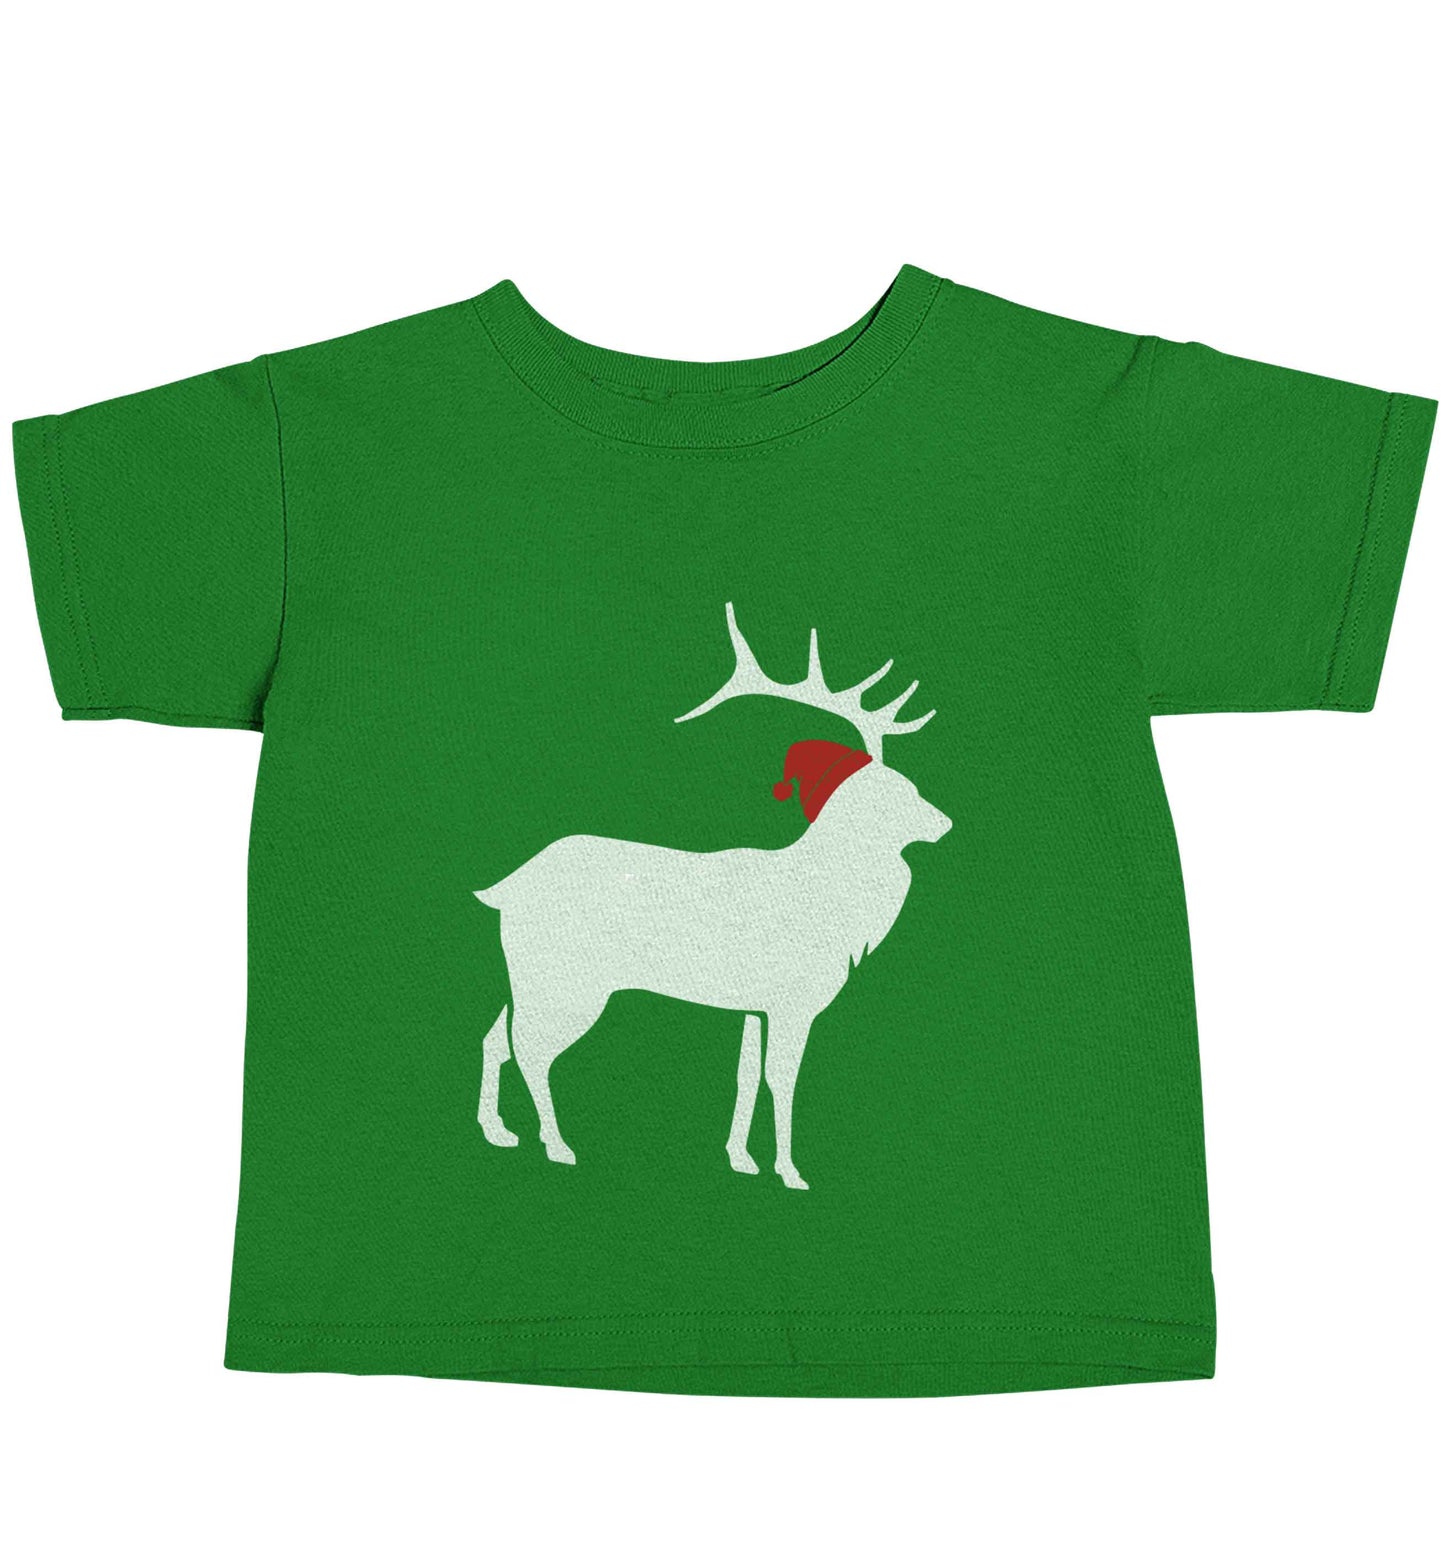 Green stag Santa green baby toddler Tshirt 2 Years